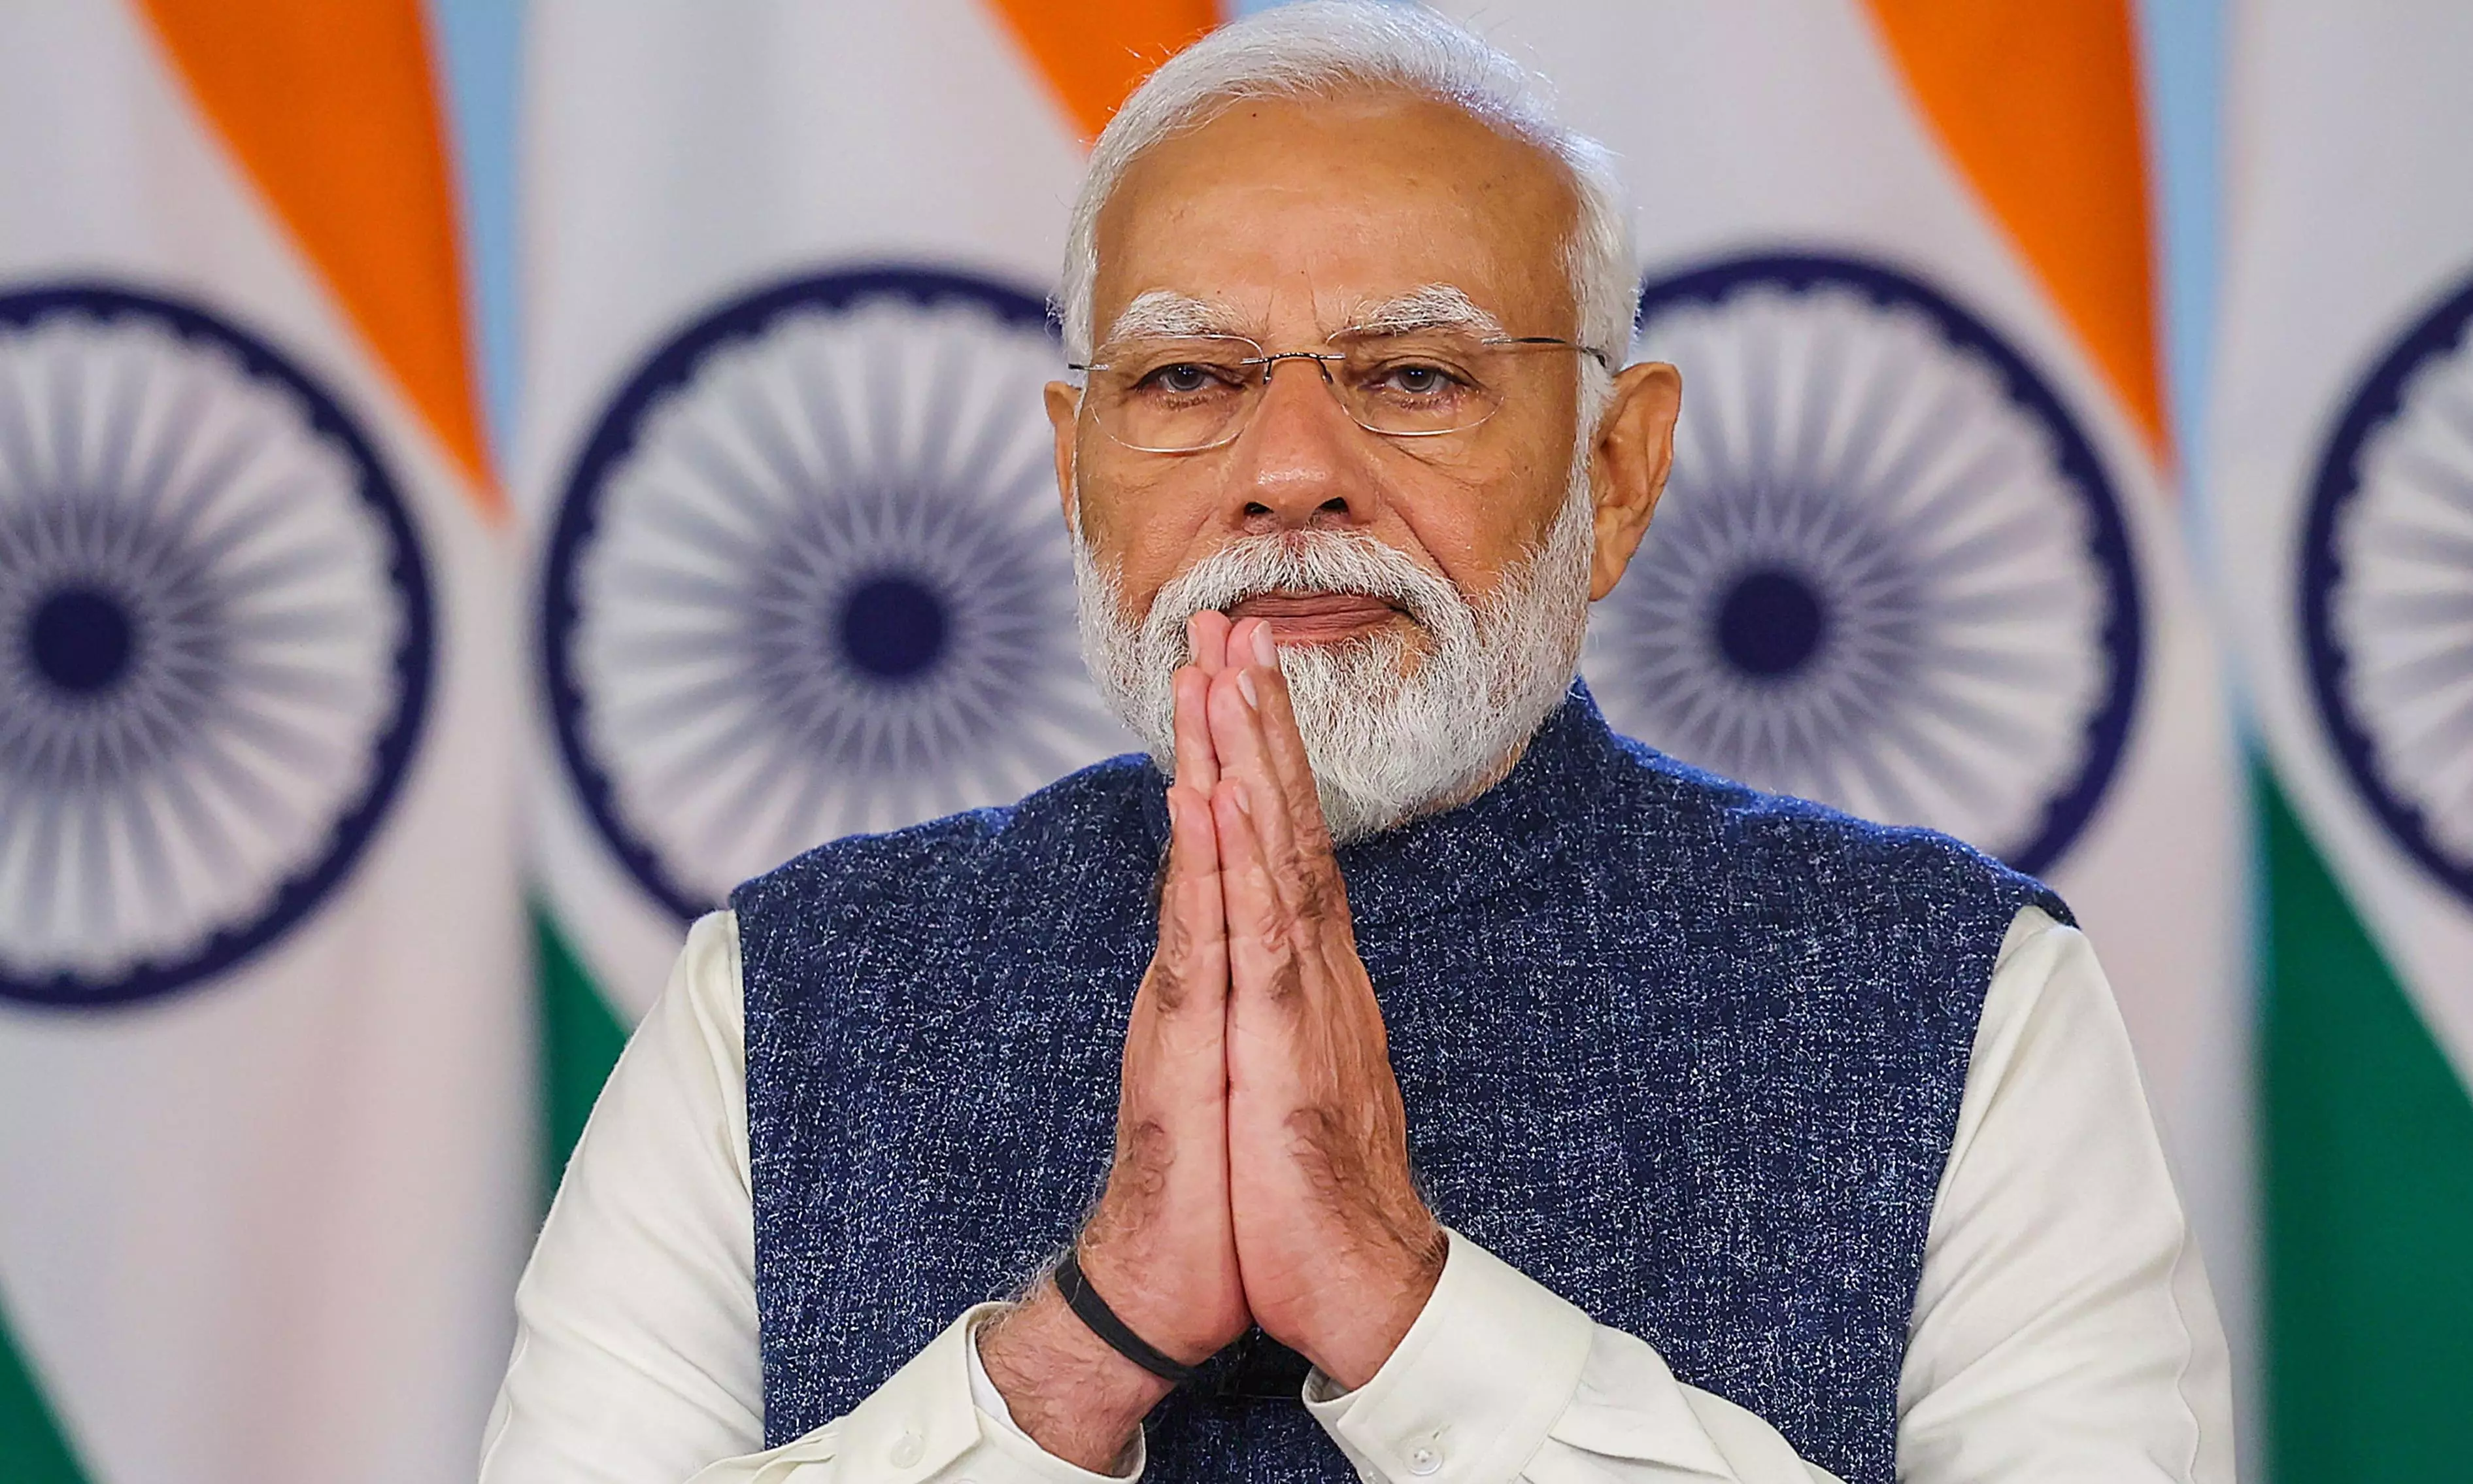 IEA will gain from Indias increased involvement: PM Modi